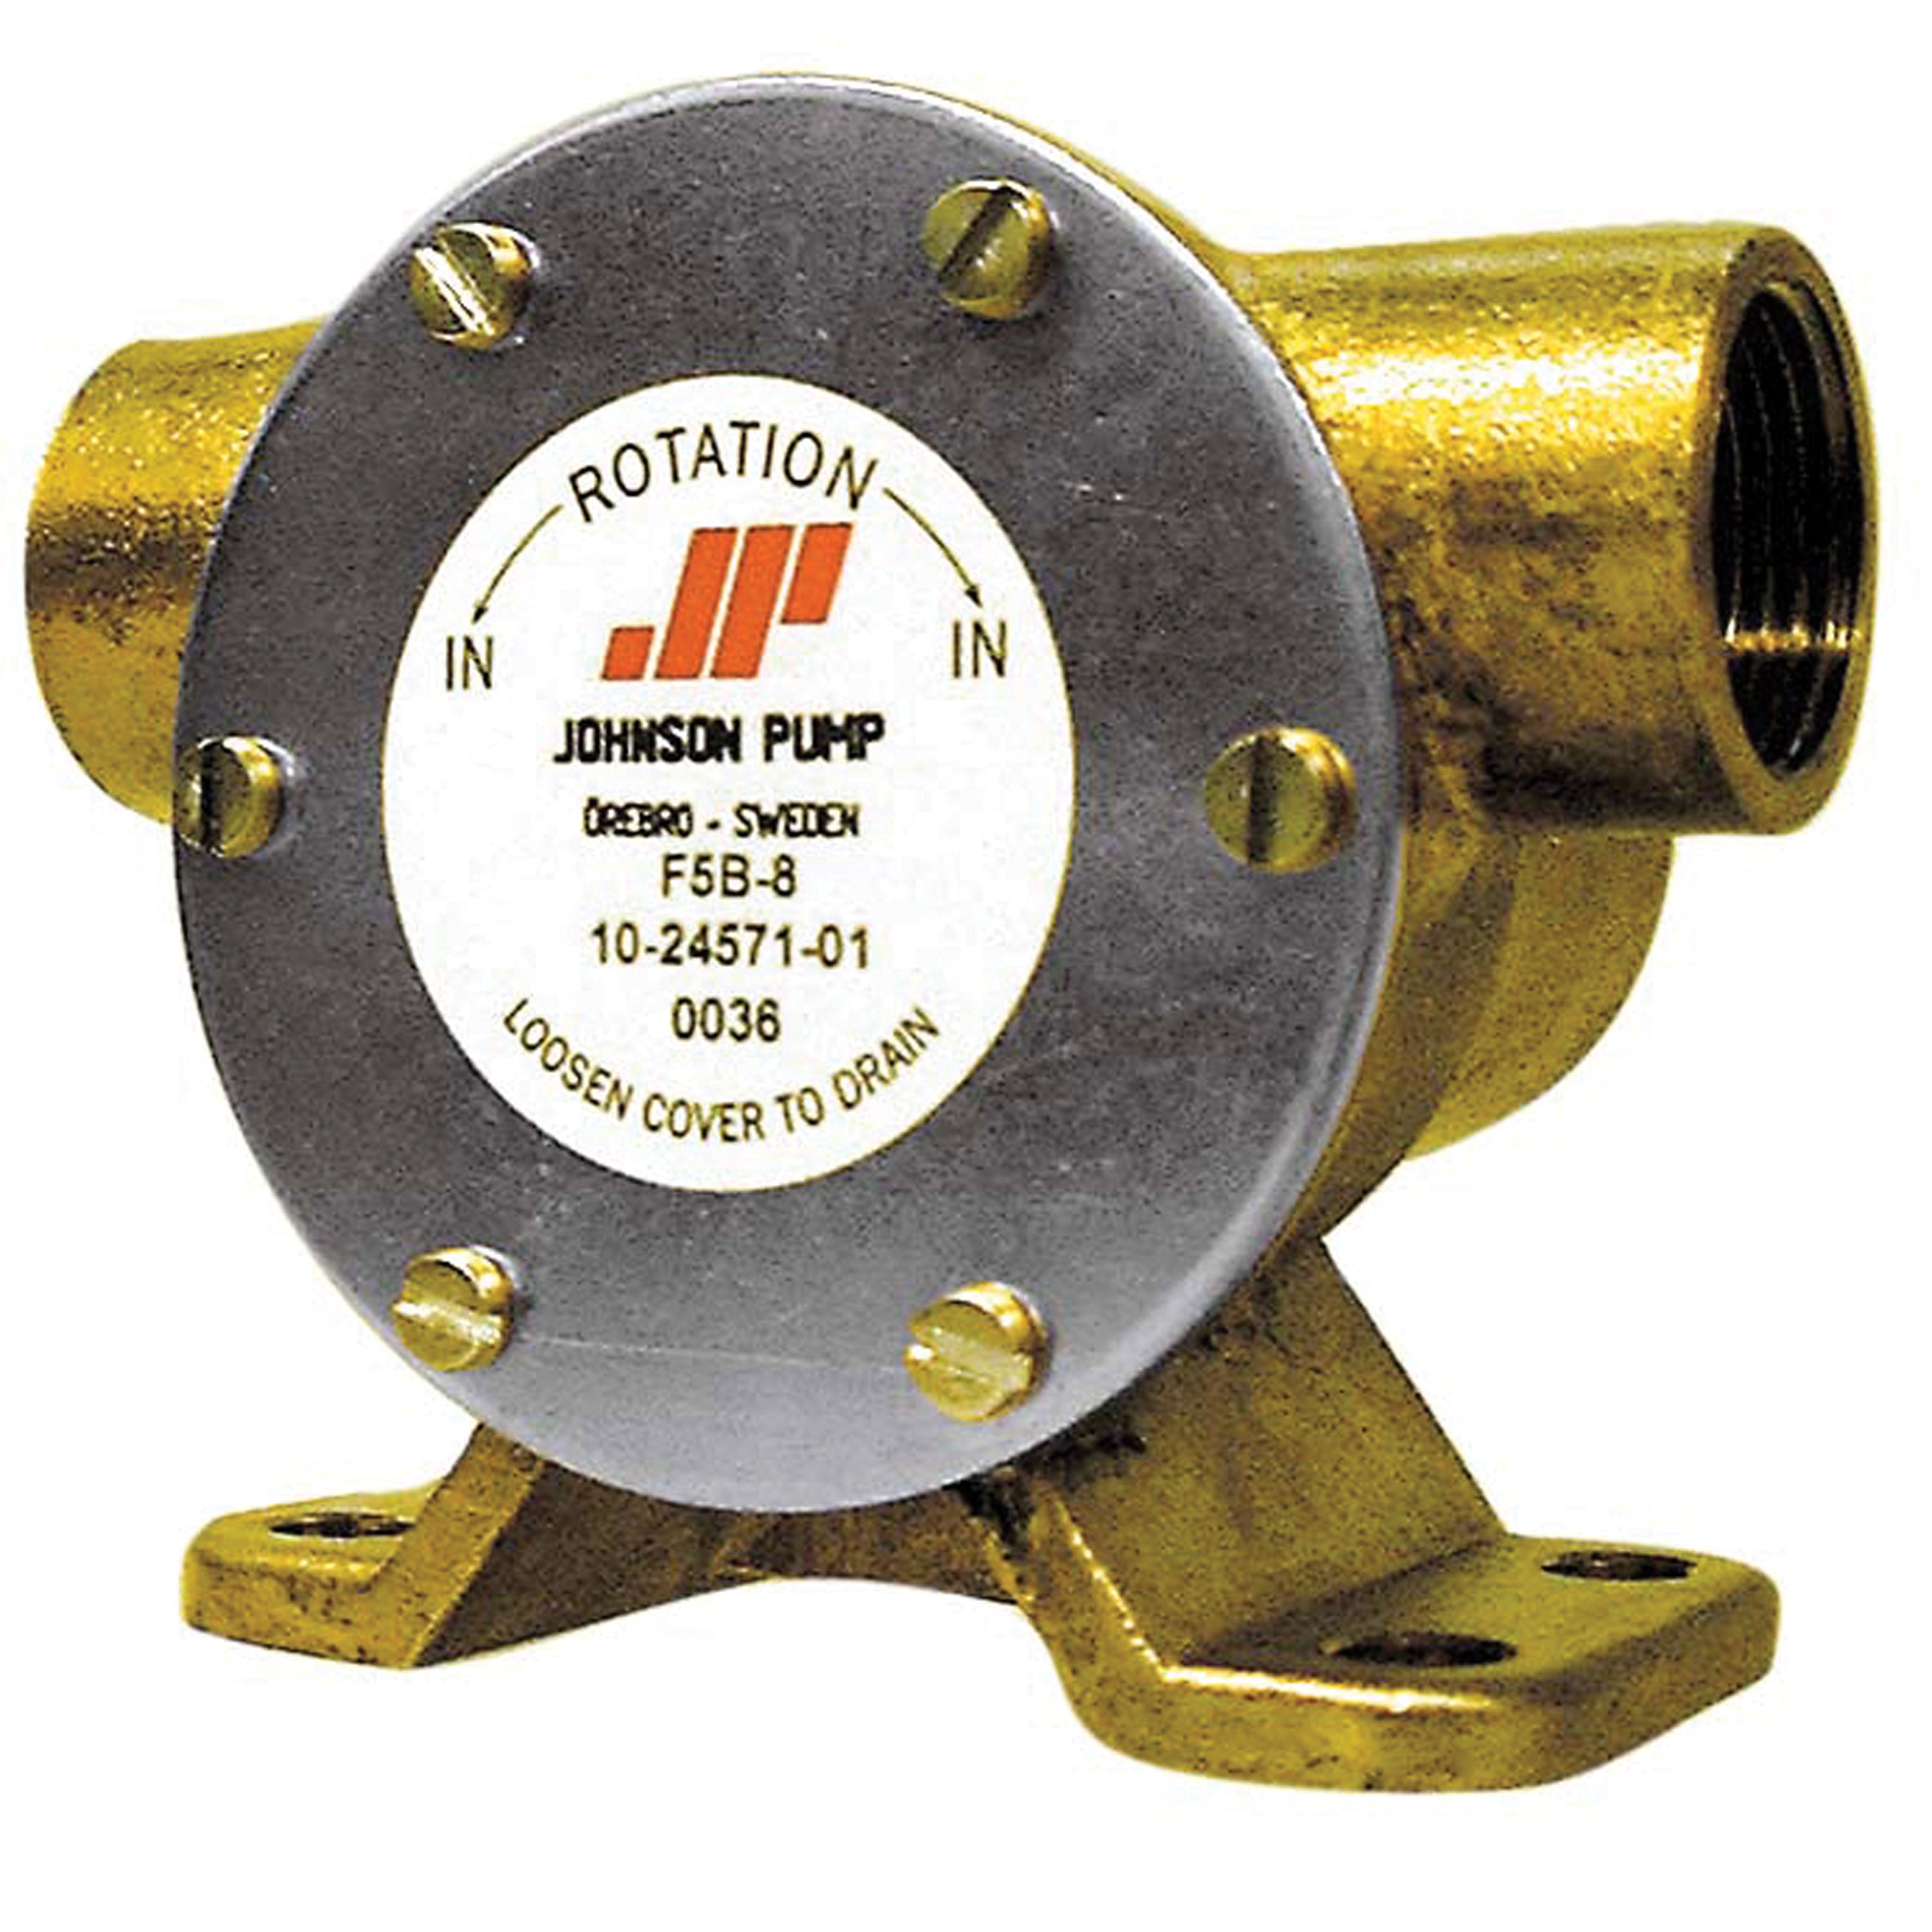 Johnson Pump 10-24571-01 F5B-8 Pedestal-Style Flexible Impeller Pump